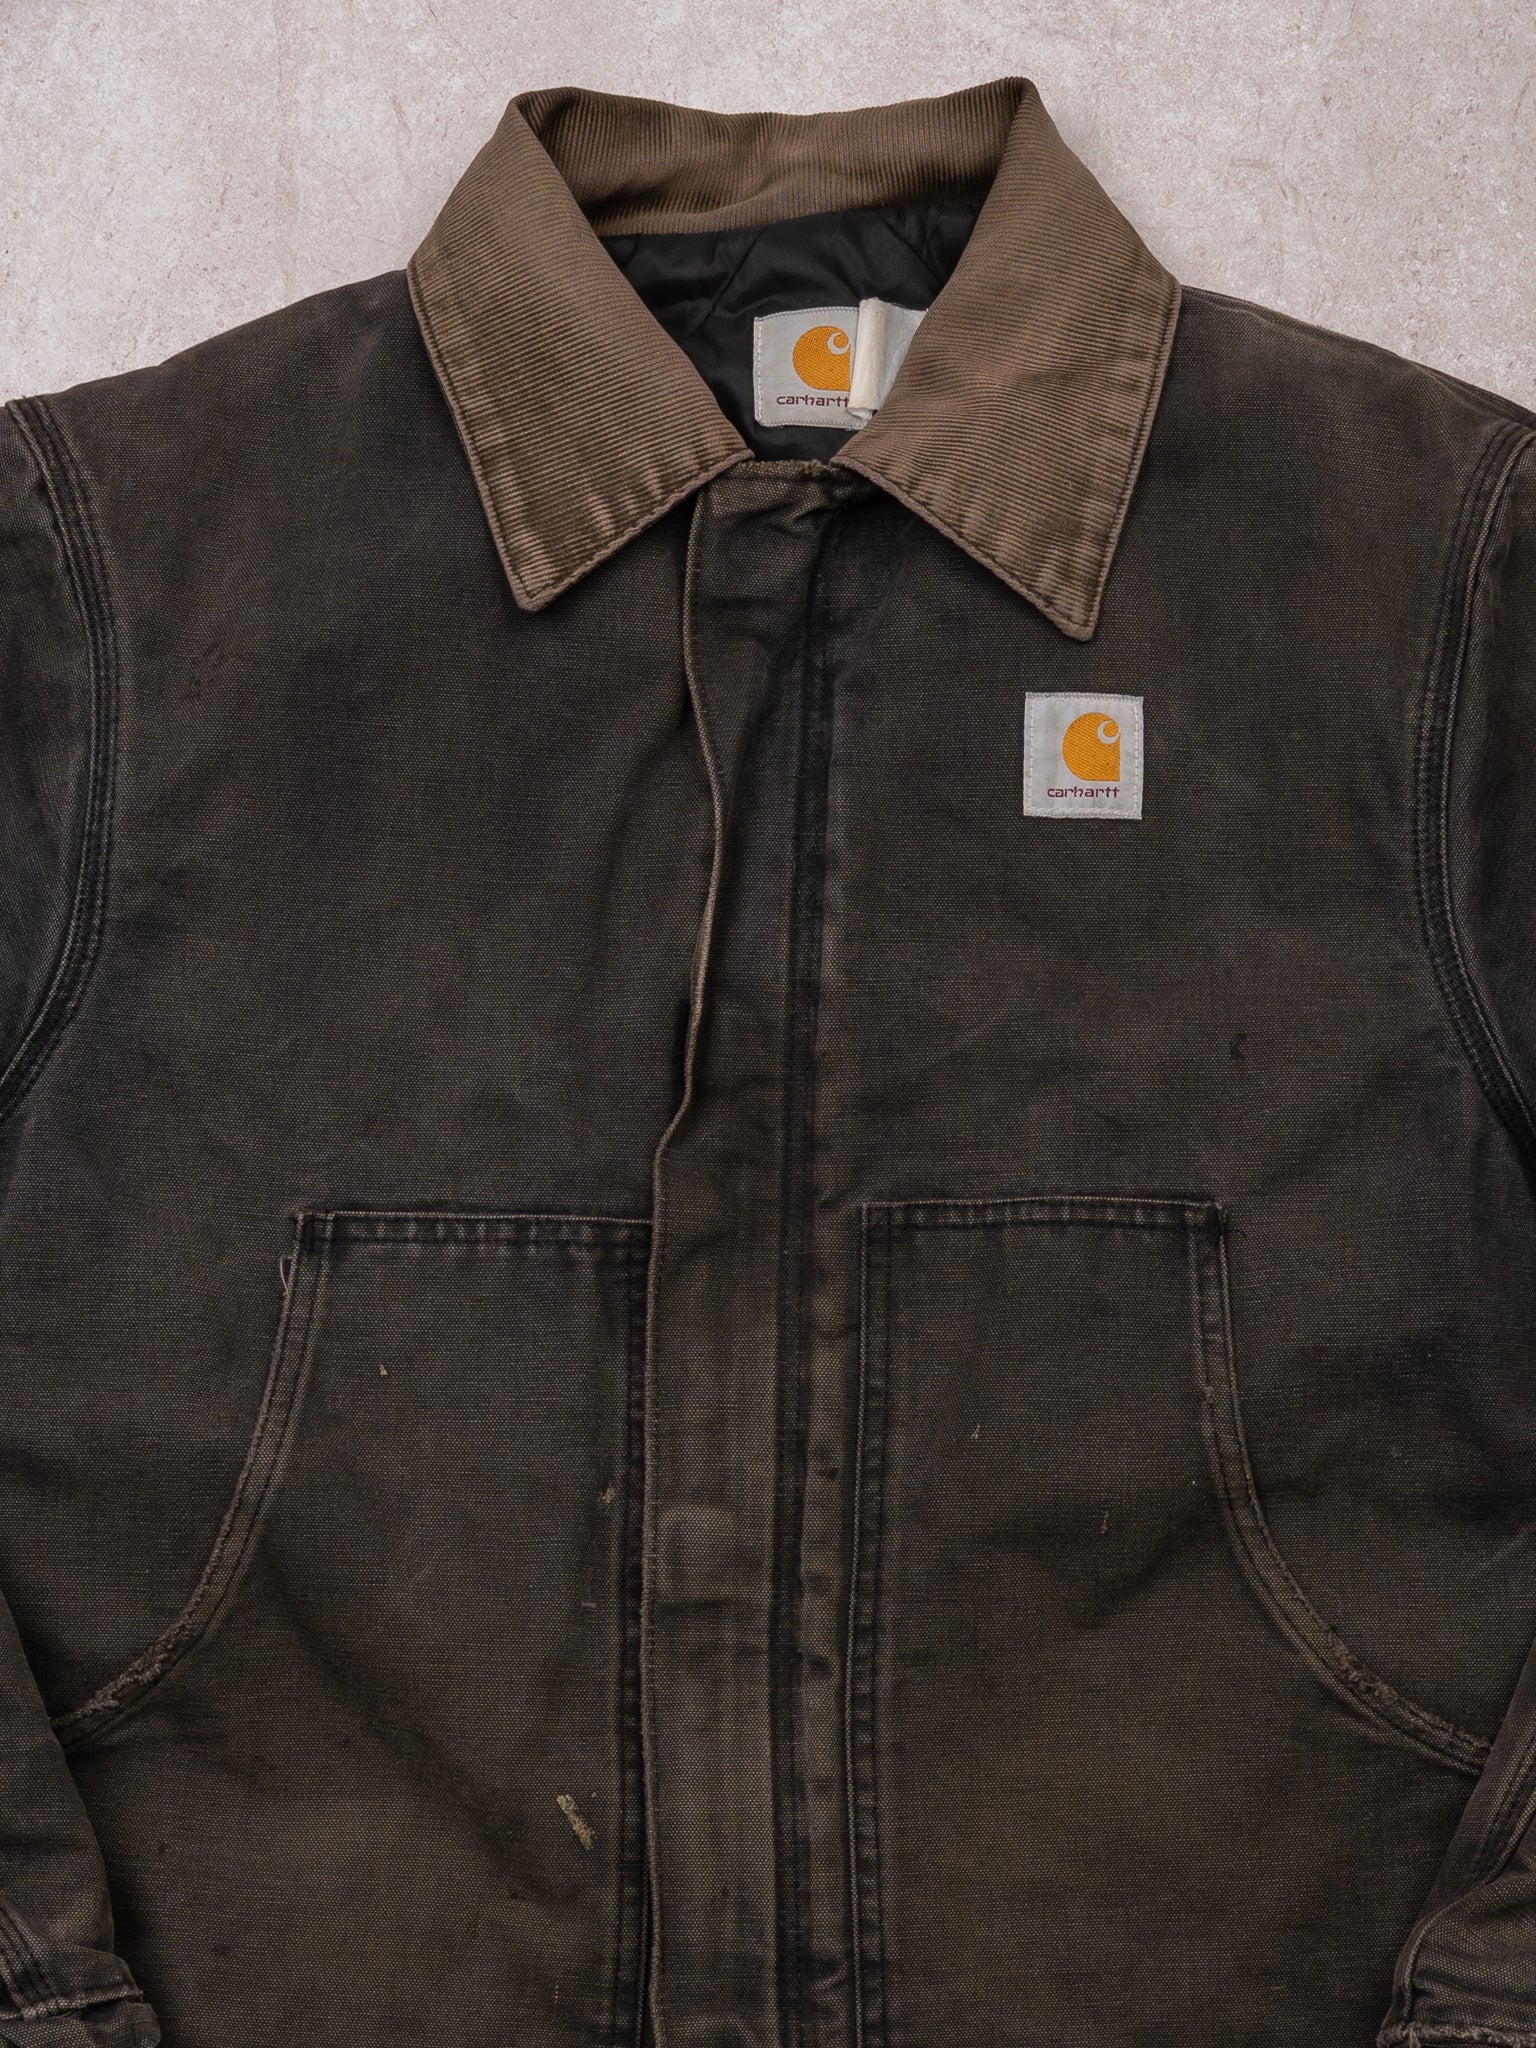 Vintage Rugged Washed Brown Carhartt Arctic Jacket (M/L)